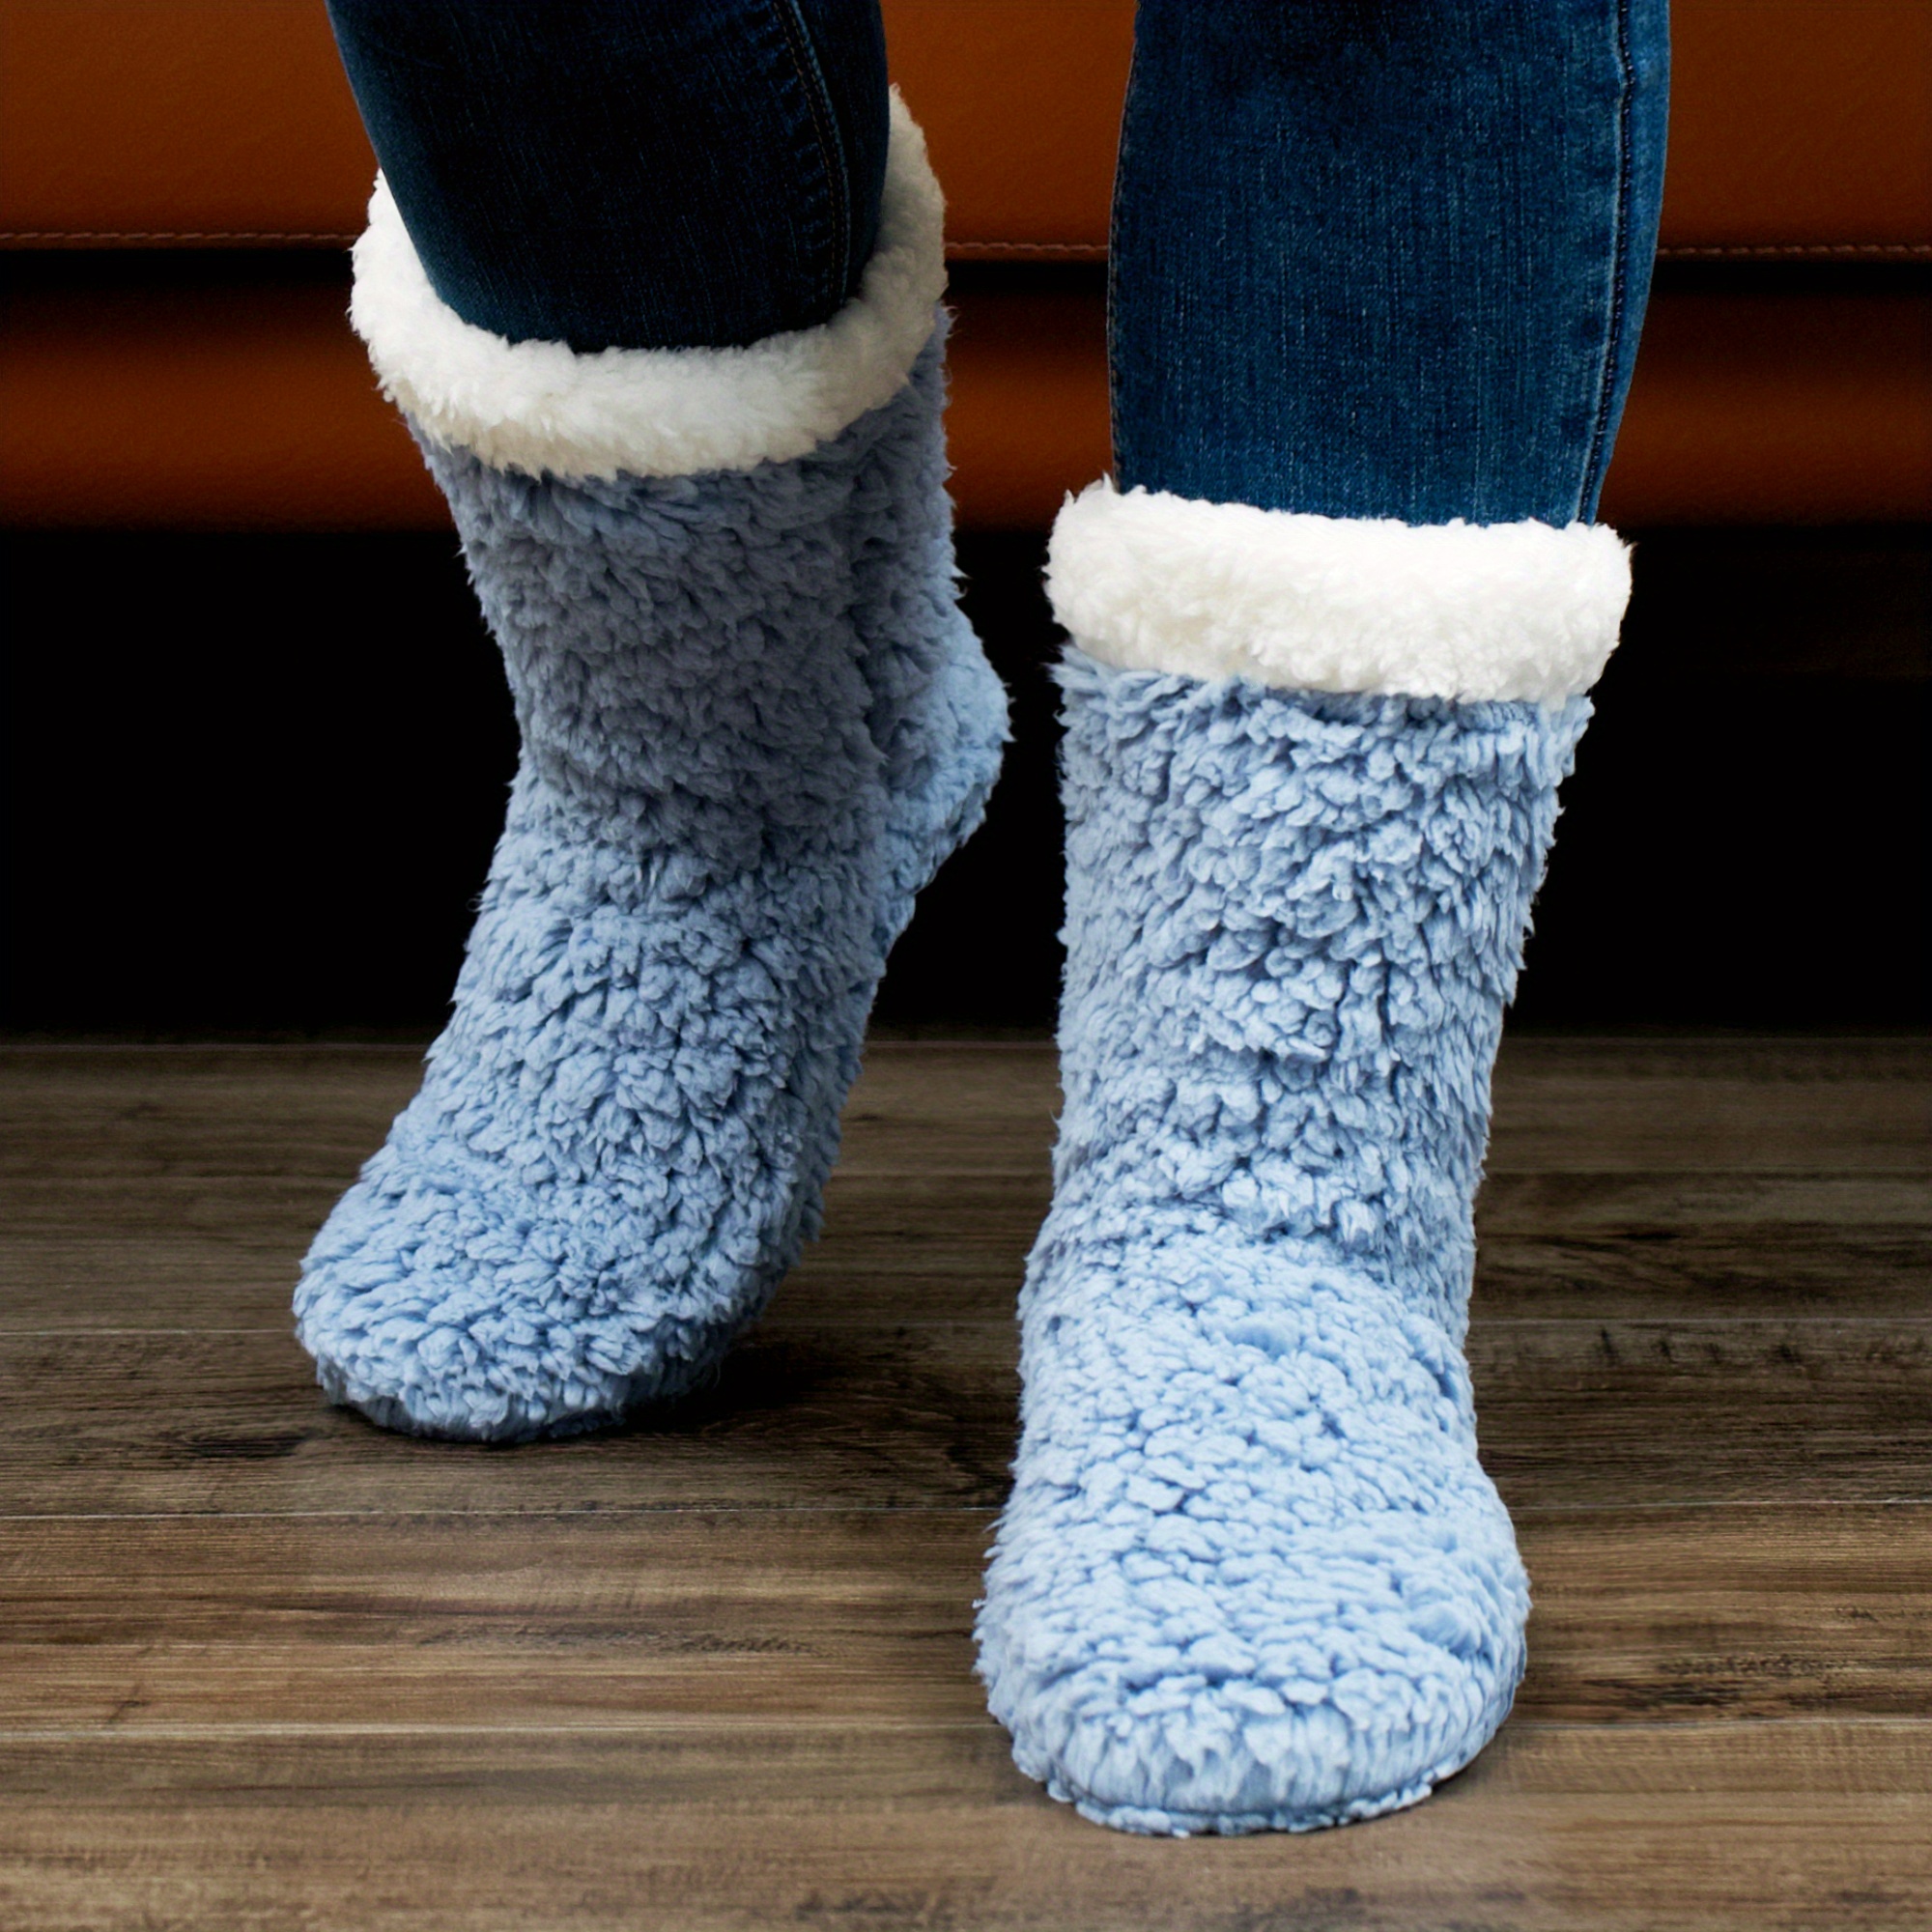 Cozy fair isle hearts slipper socks with sherpa lining, light blue